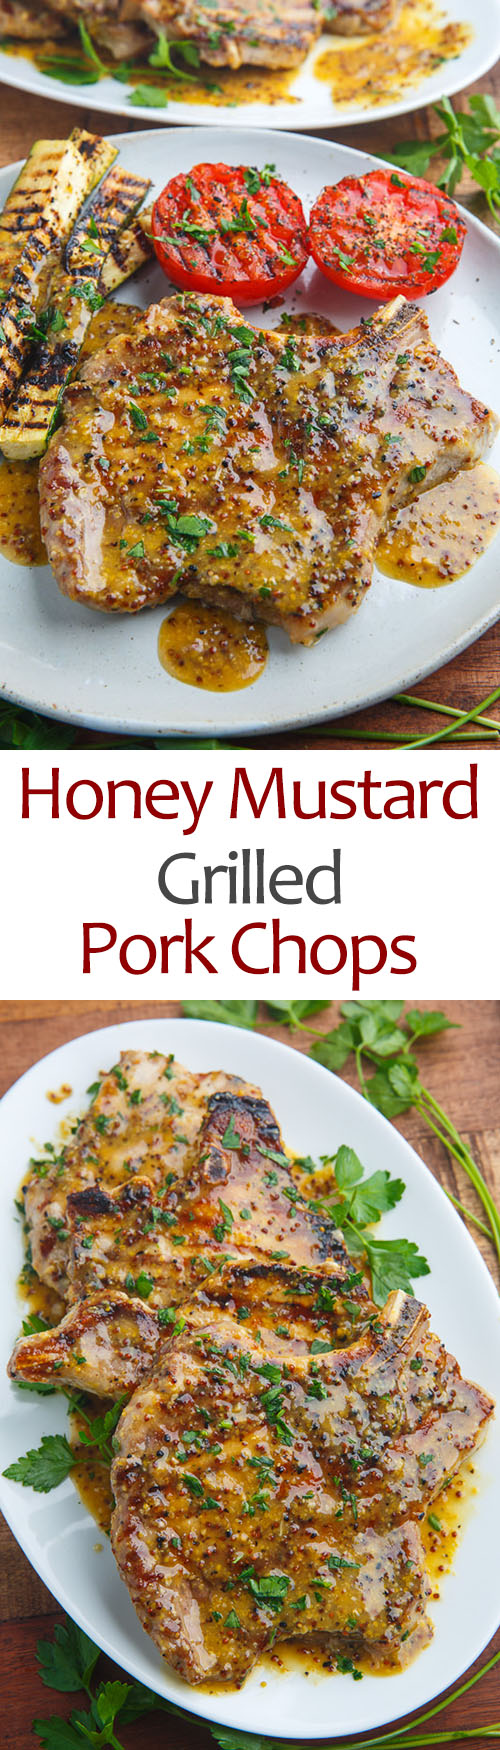 Honey Mustard Grilled Pork Chops